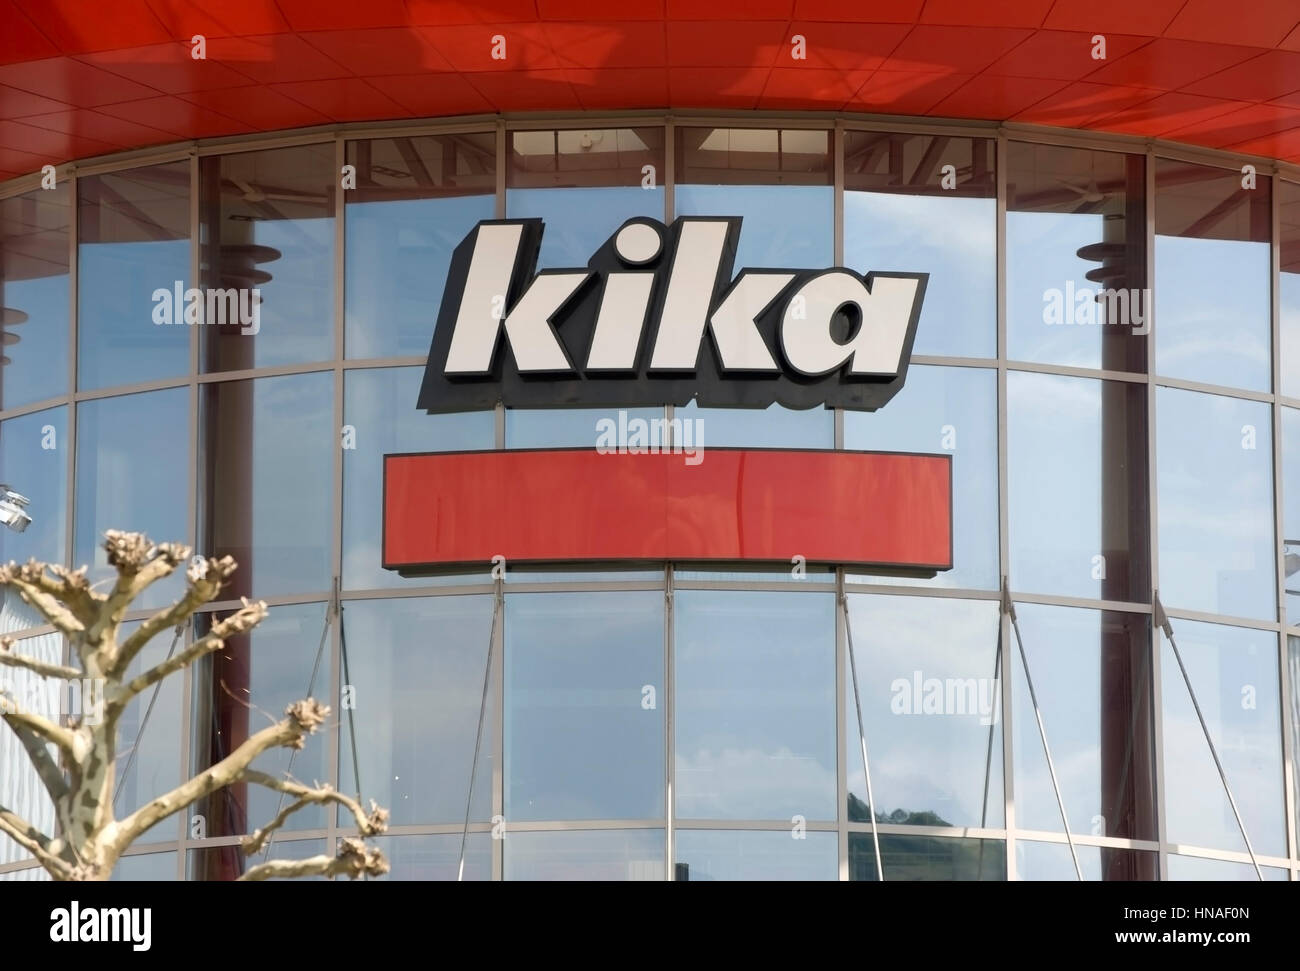 Kiki, Moebelhaus, Feldbach, Steiermark - KIKA, furniture store, Austria Stock Photo